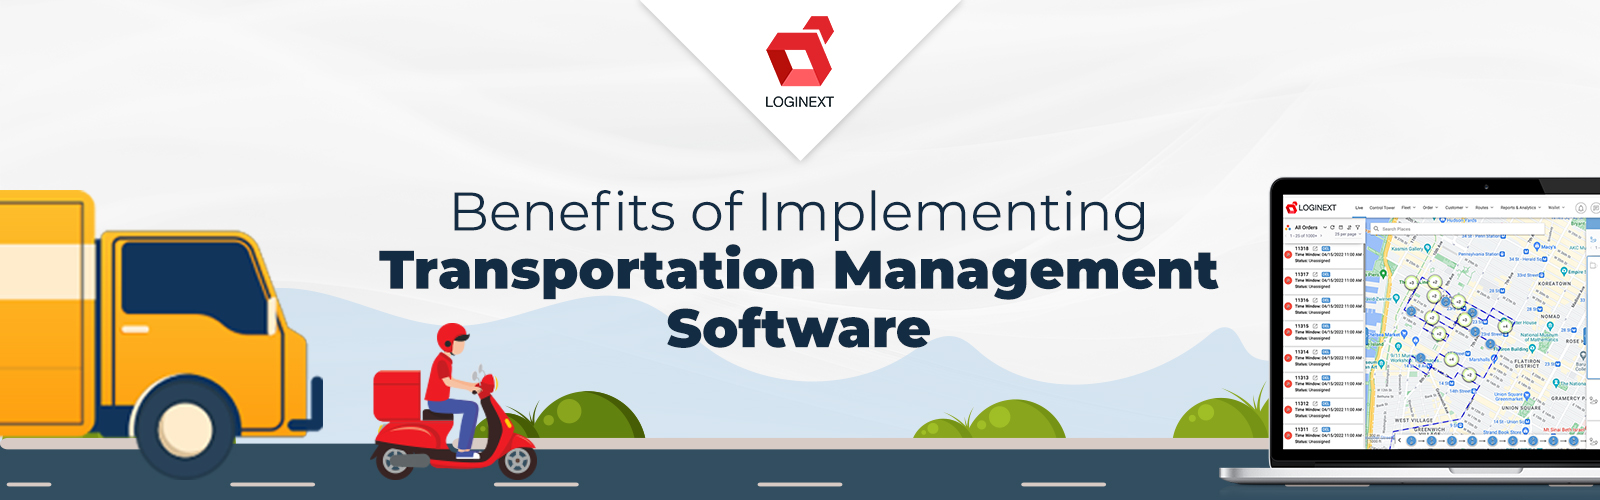 Benefits of Using Transportation Management Software